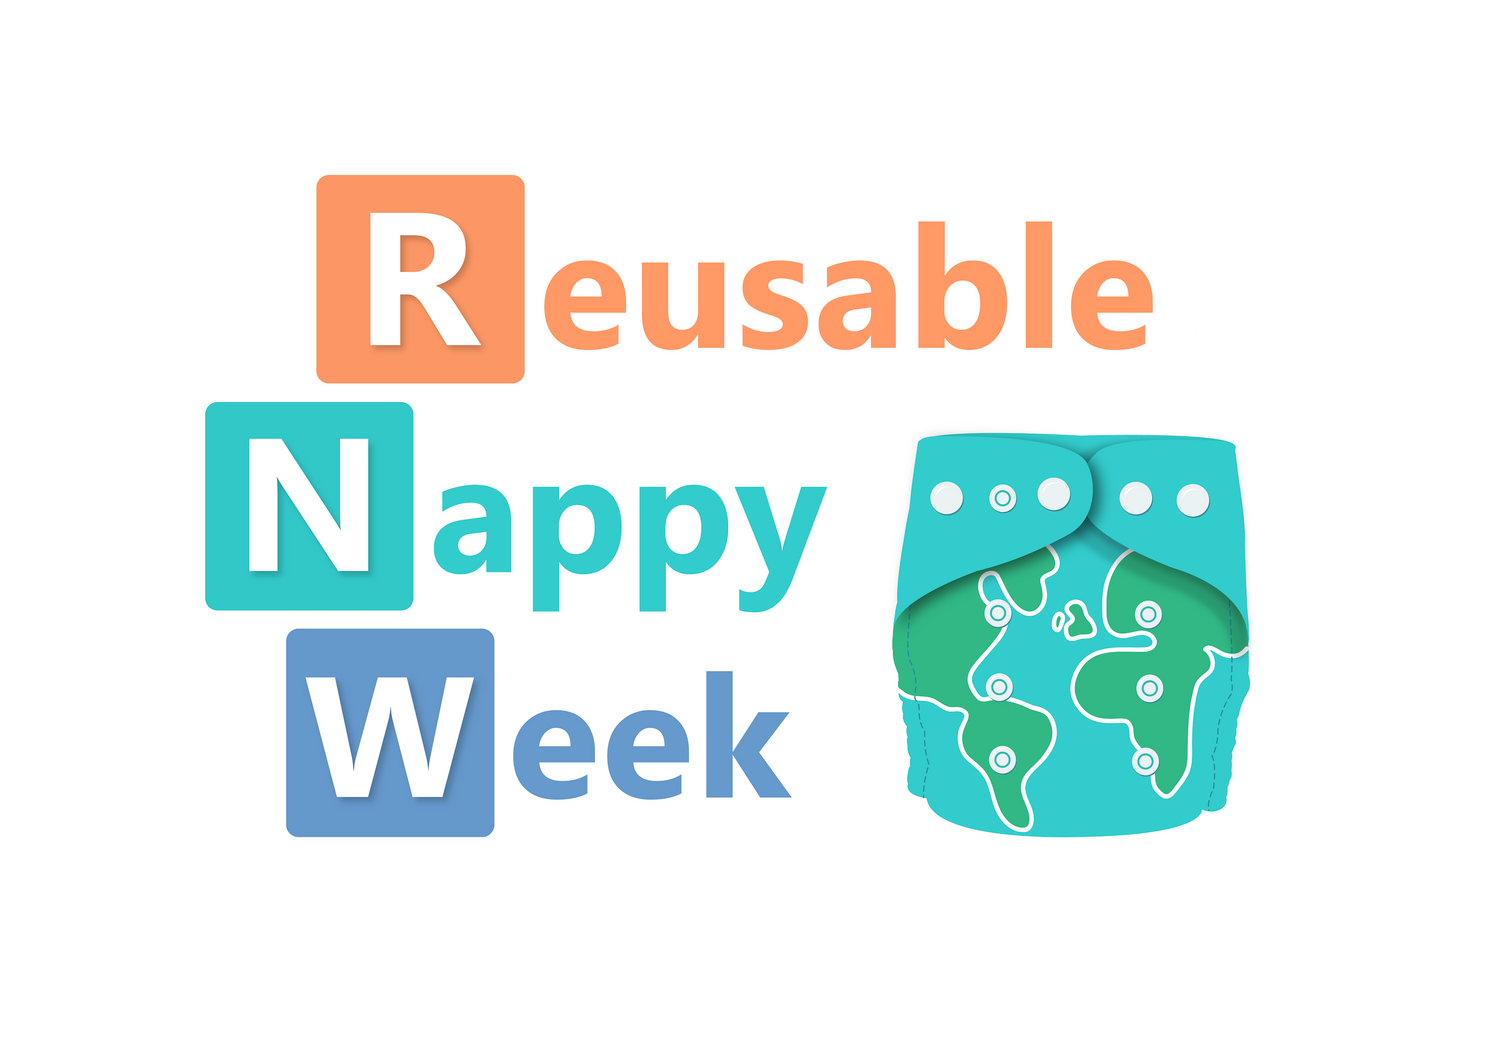 Choose to reuse: Reusable nappy week 2023, maandag 24 t/m zondag 30 april